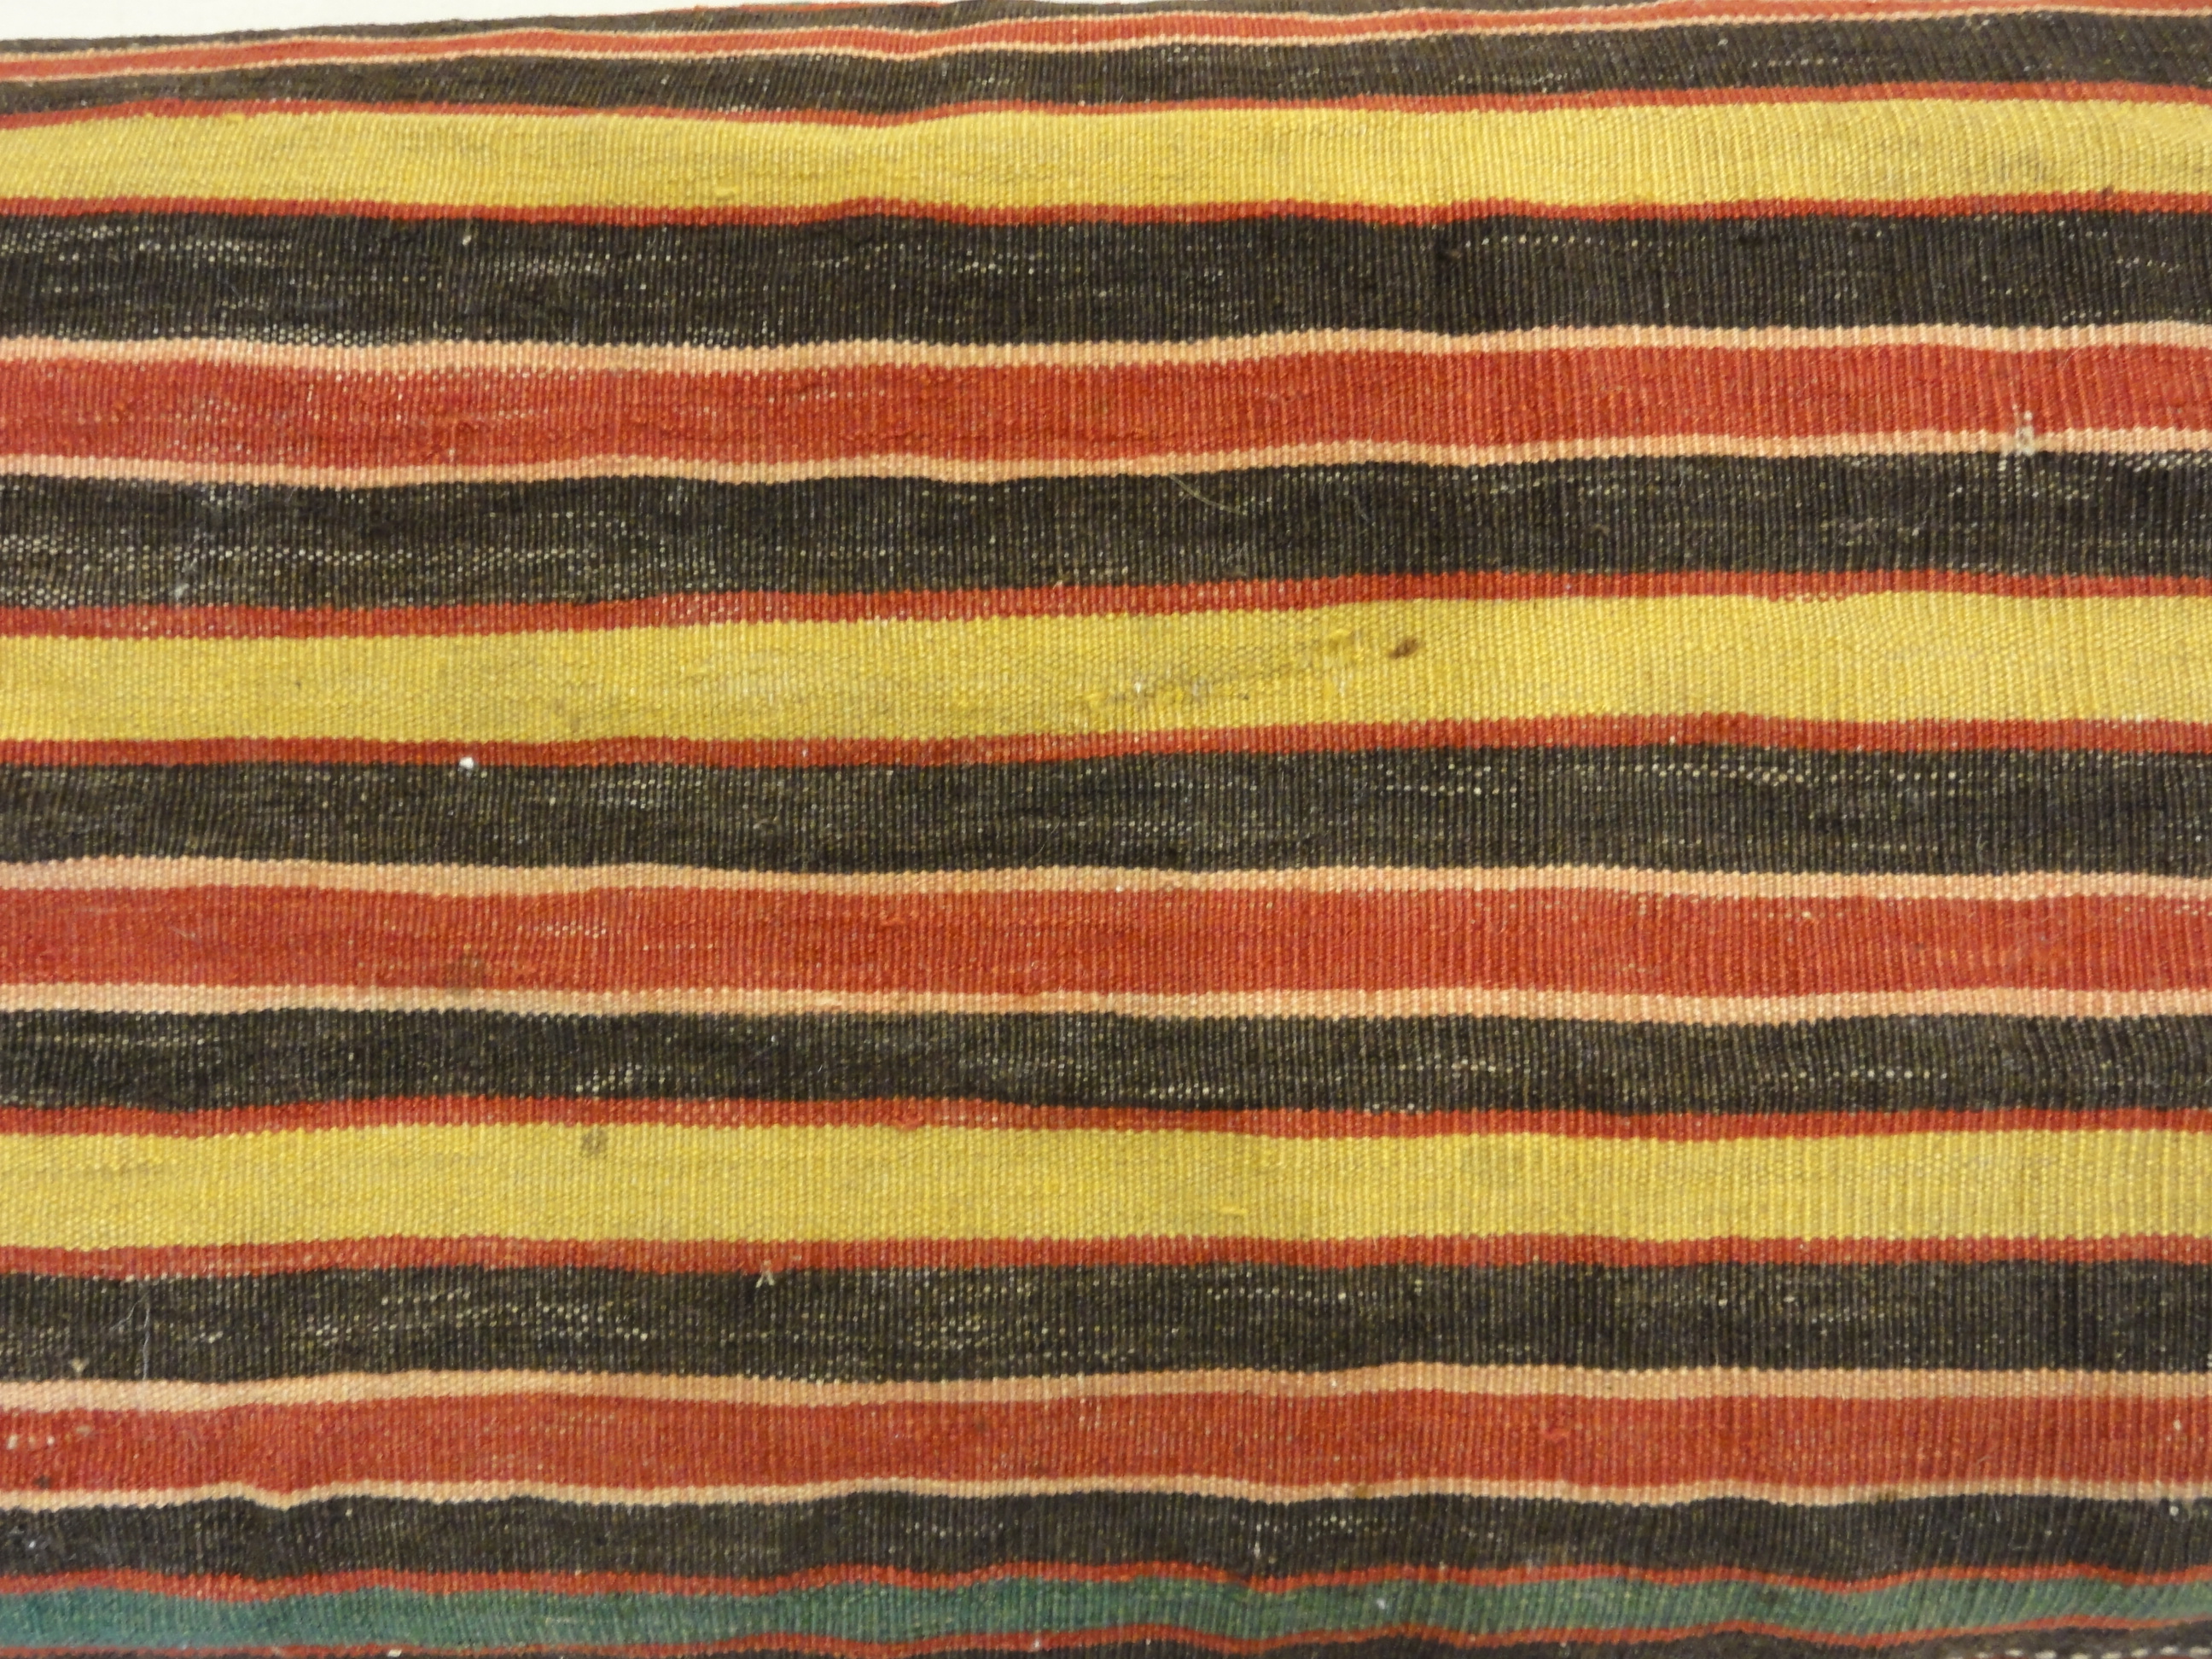 Antique Kelim Camel Bag Mafrash Rugs and More Oriental carpet